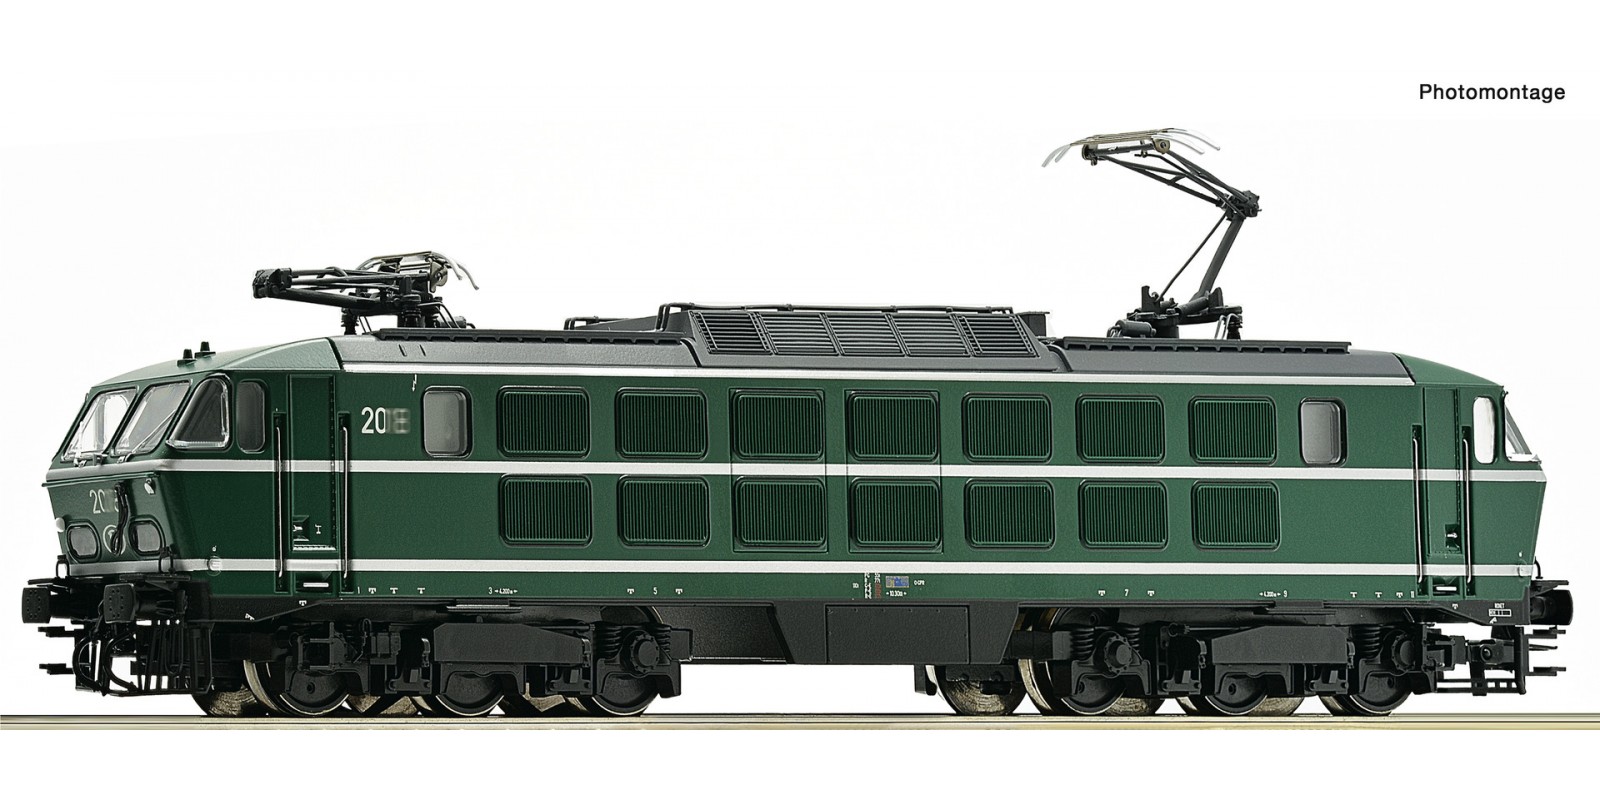 RO7520004 Electric locomotive Reeks 20, SNCB